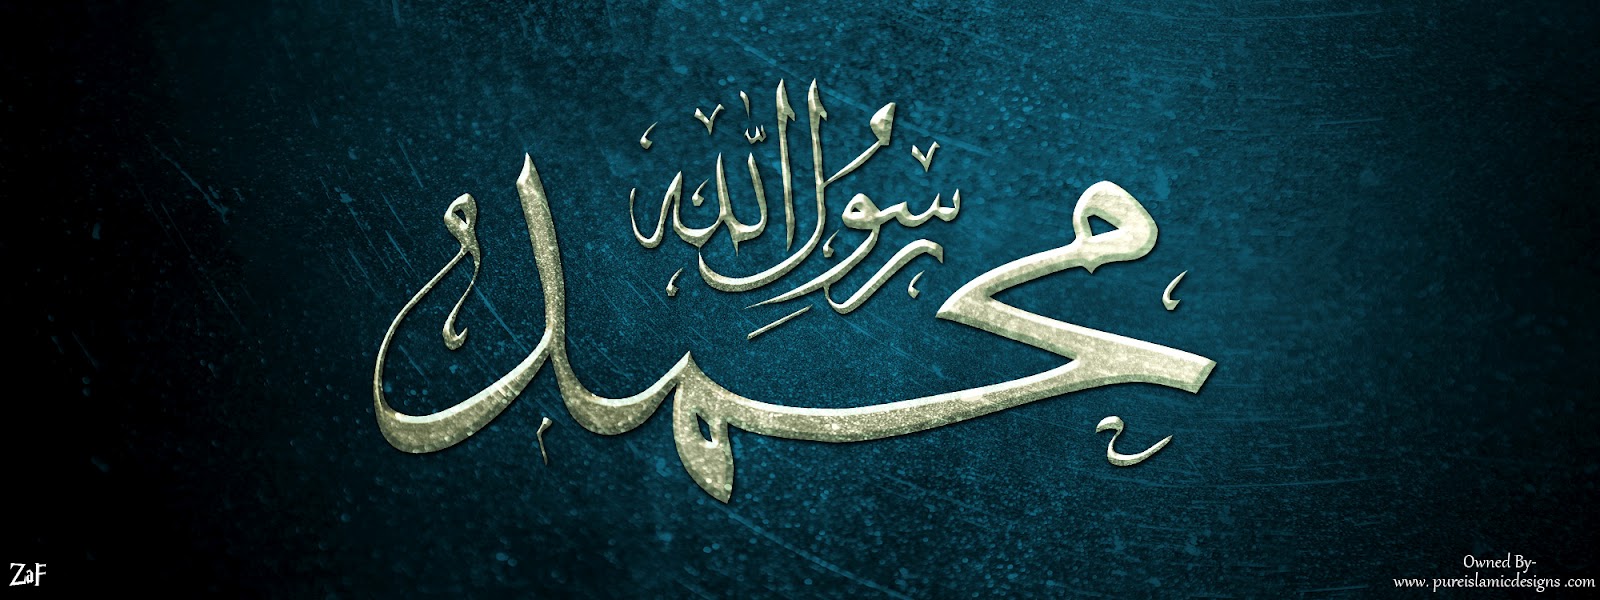 Prophet-muhammad - Prophet Muhammad Wallpaper For Facebook - 1600x600  Wallpaper 